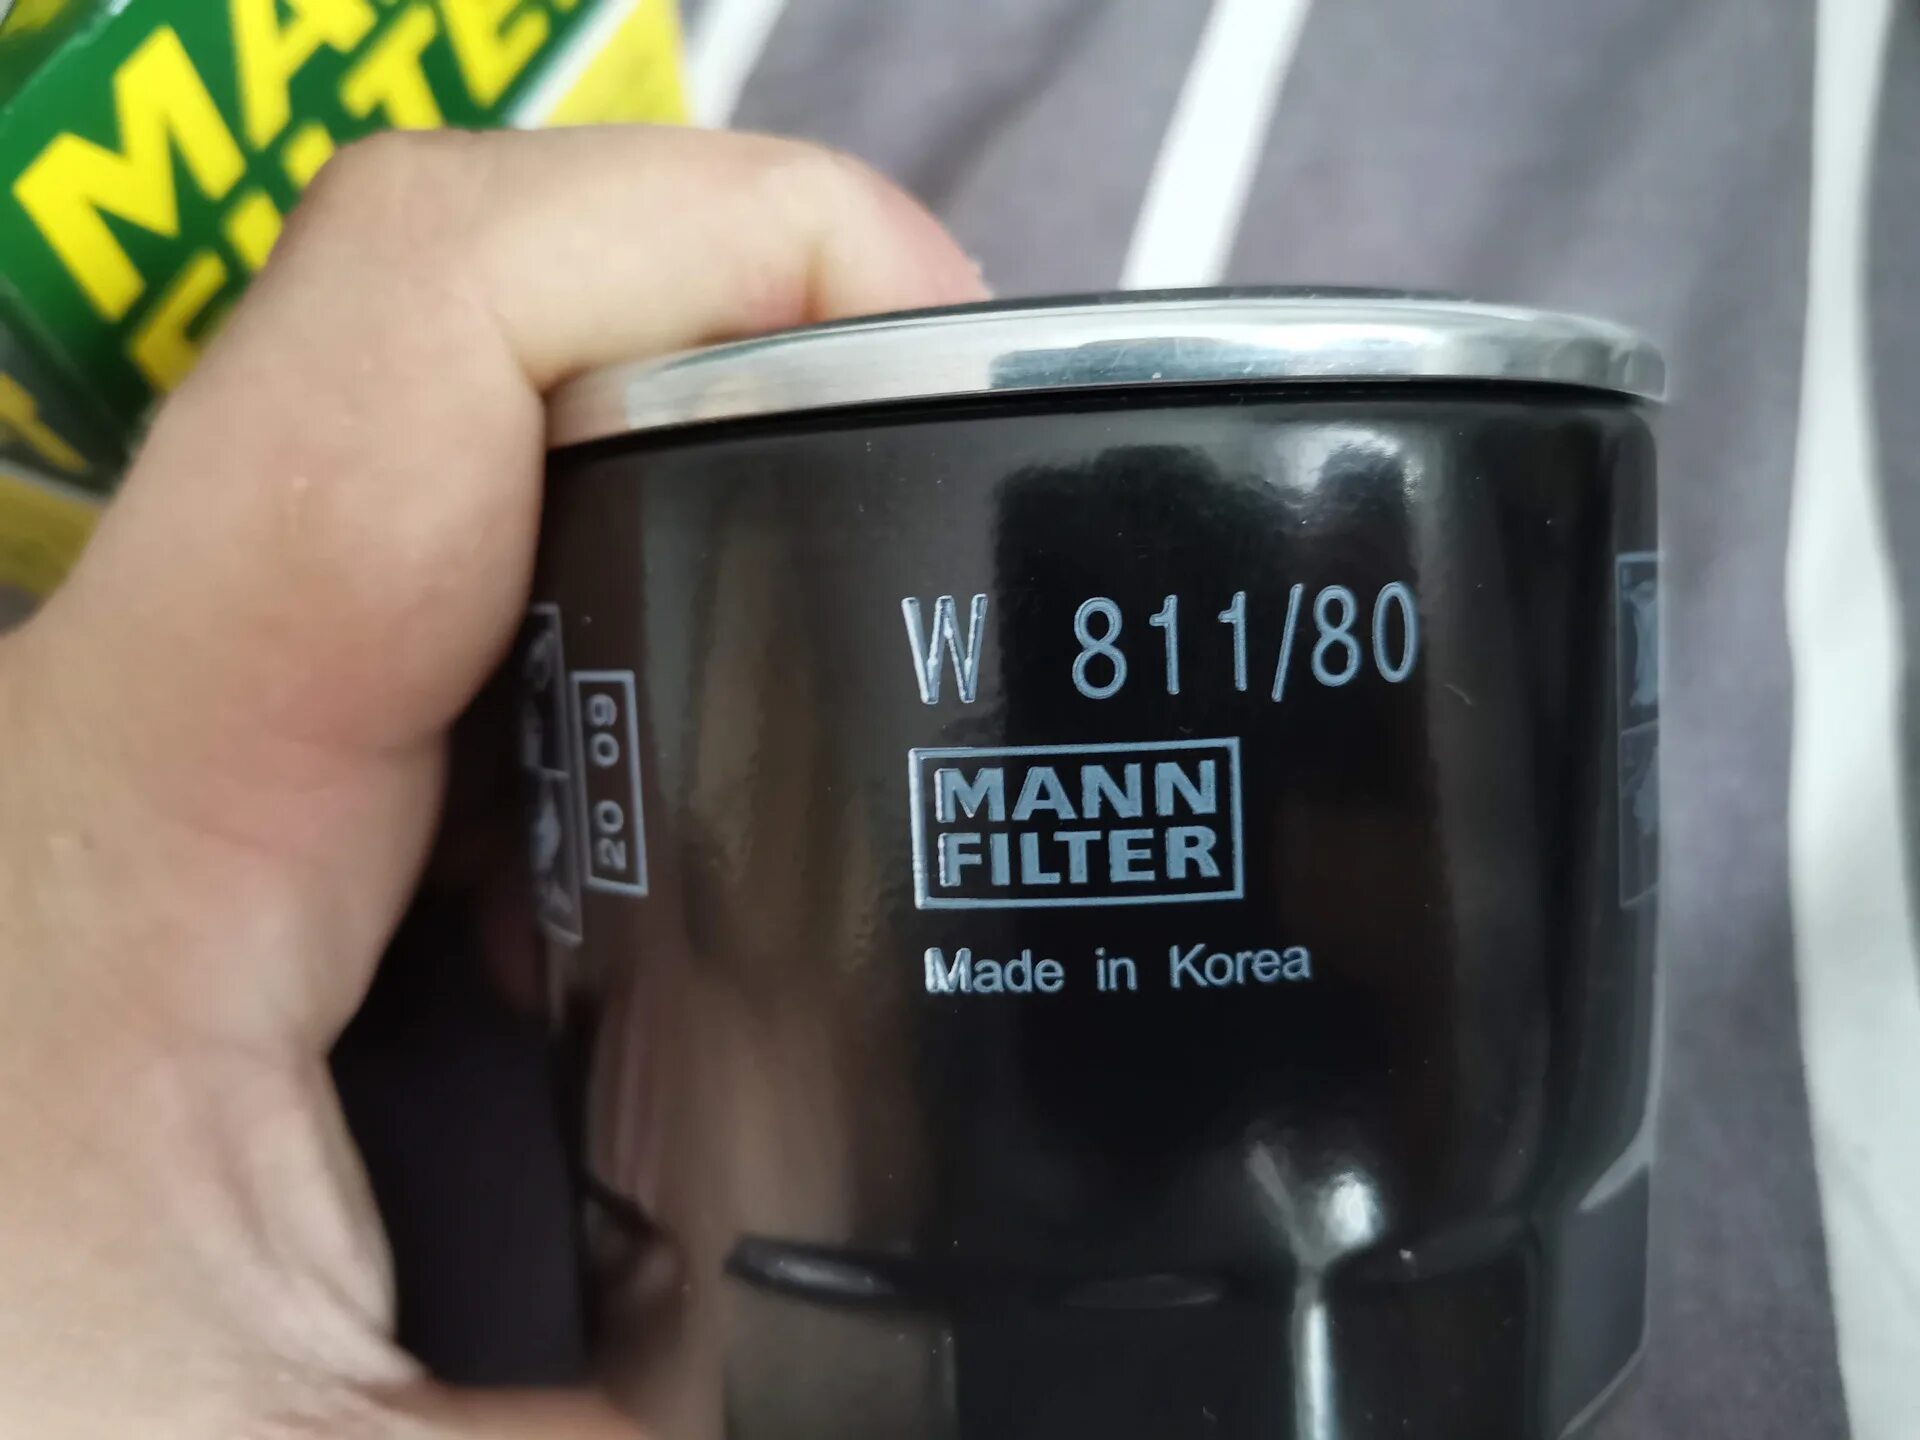 Mann w811. Фильтр Манн 811/80. W811/80 Subaru. W81180 Mann-Filter фильтр масляный Mann w 811/80. Проверить подлинность фильтра